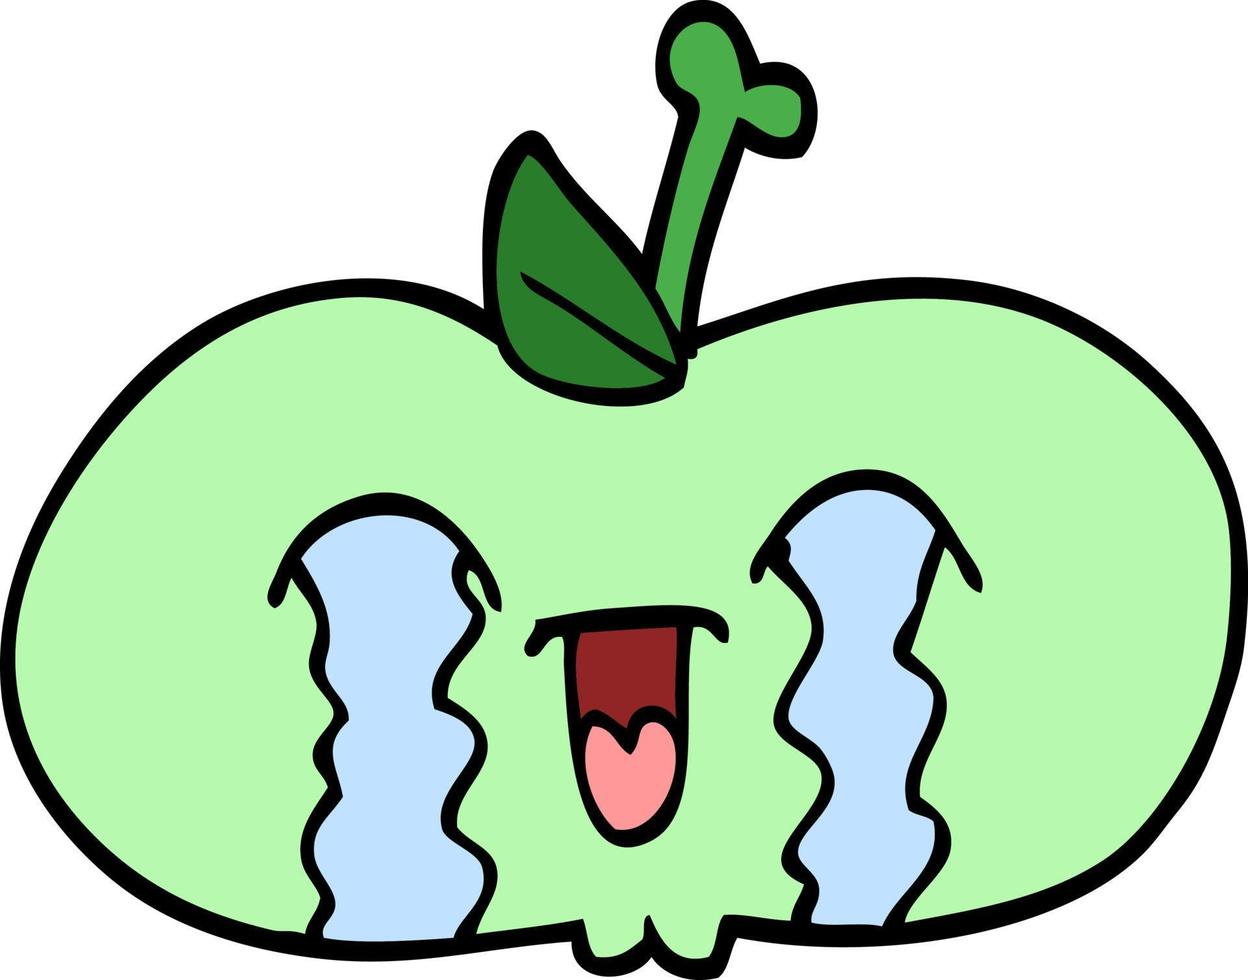 hand drawn doodle style cartoon of a sad apple vector